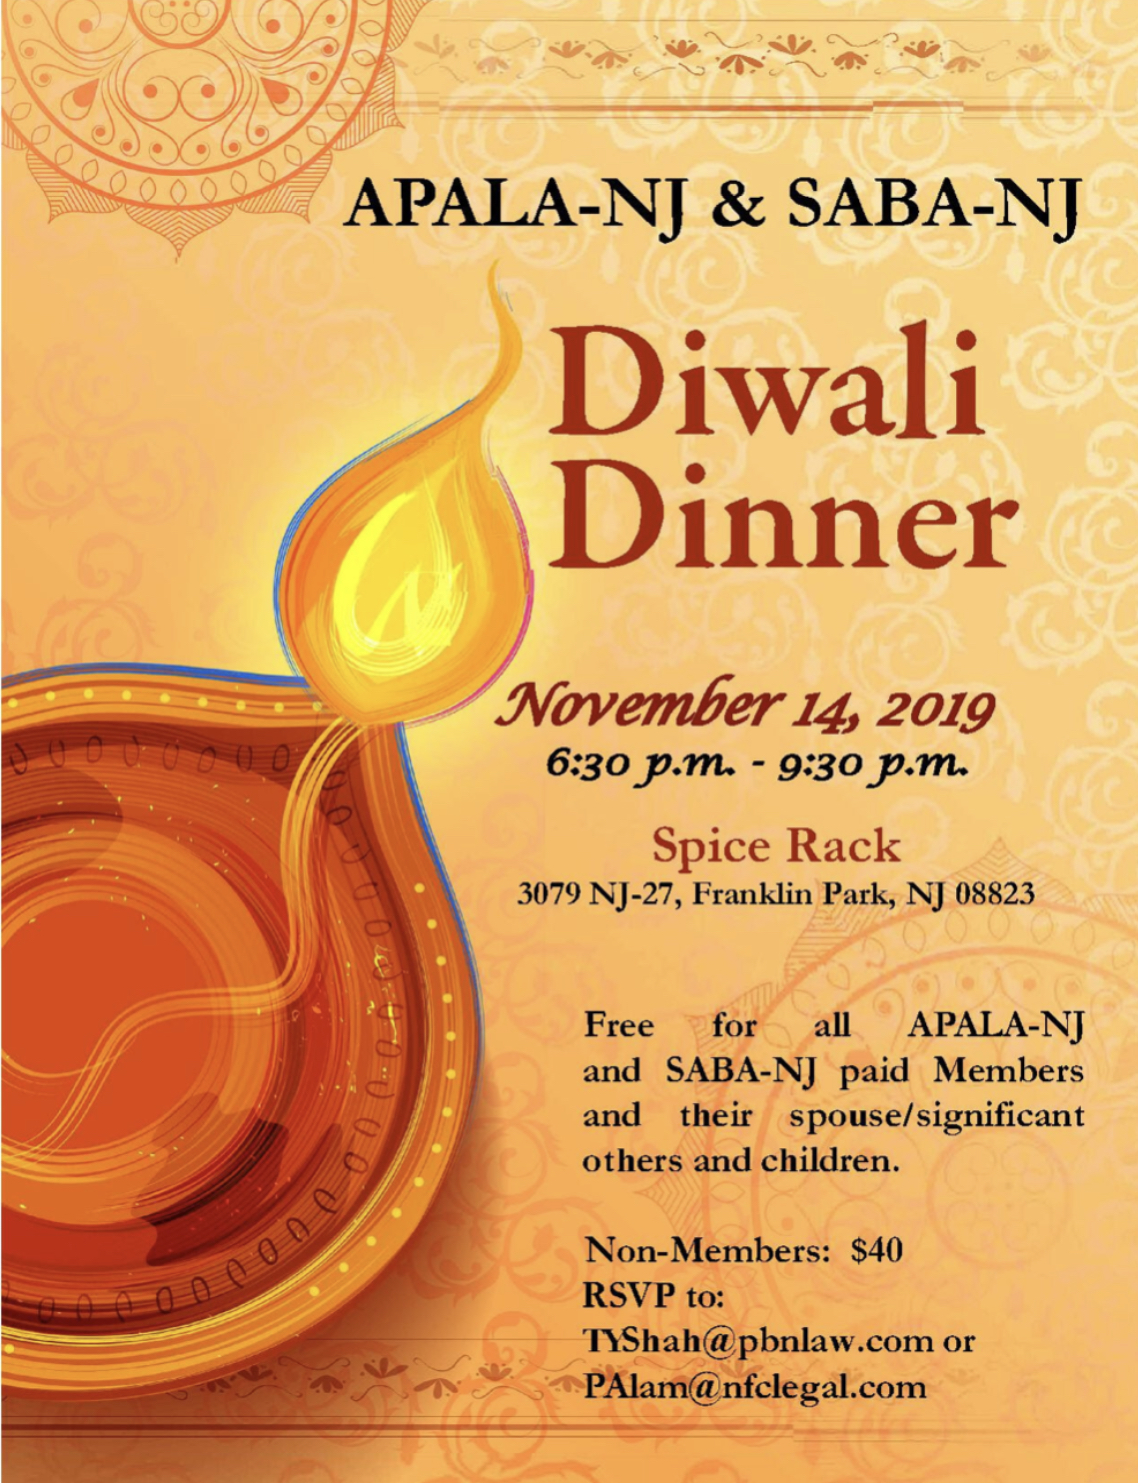 APALA-NJ & SABA-NJ - Diwali Dinner